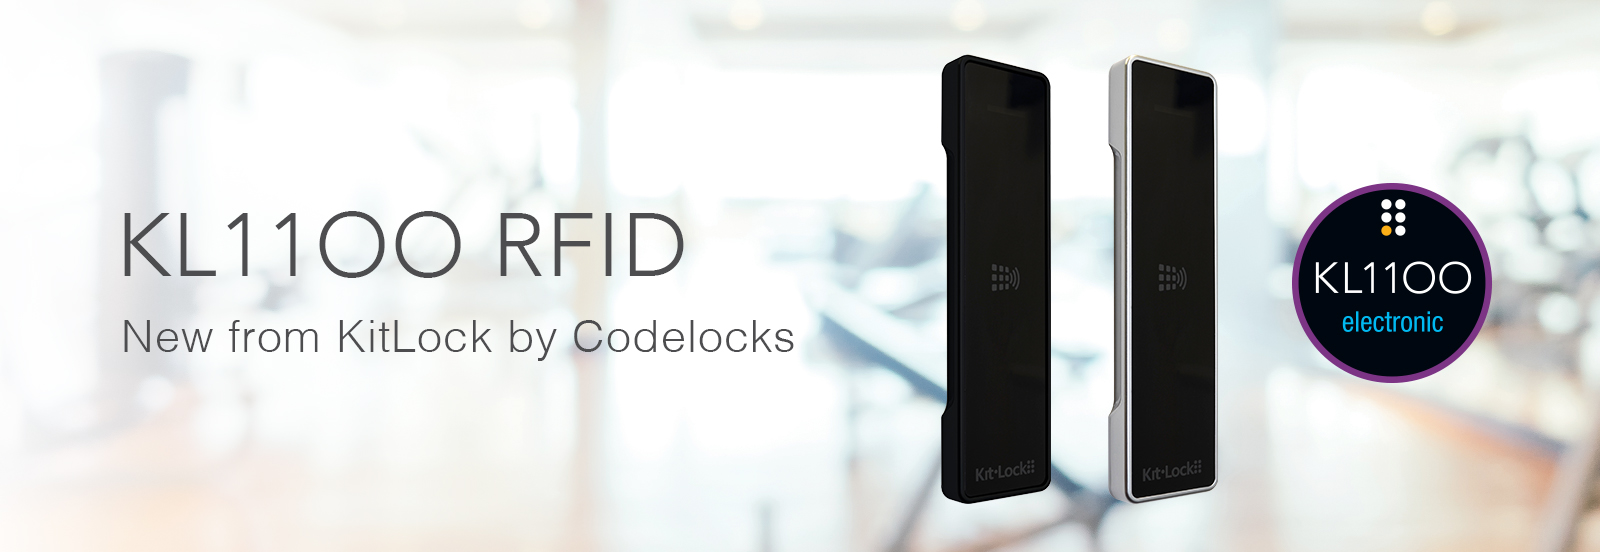 New KL1100 RFID added to the KitLock by Codelocks range (image)